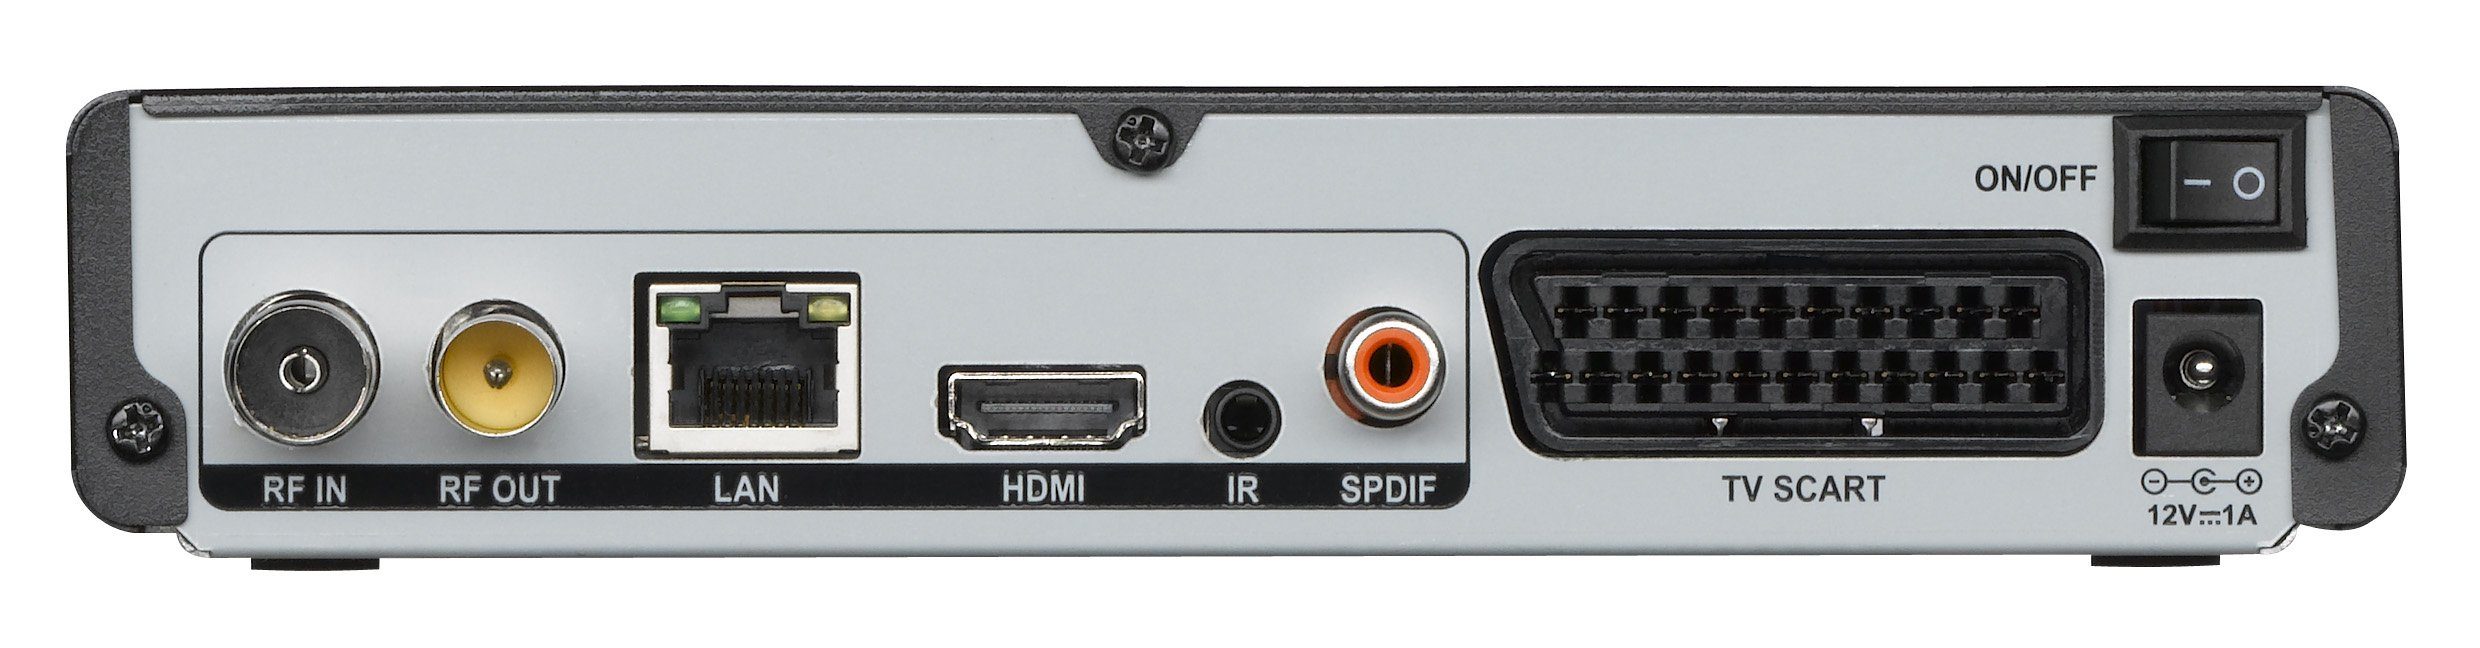 DVBT/T2 HD SL65T2 Comag HEVC FullHD HDTV, Receiver HDMI, Irdeto COMAG (H.265, Receiver DVB-T2